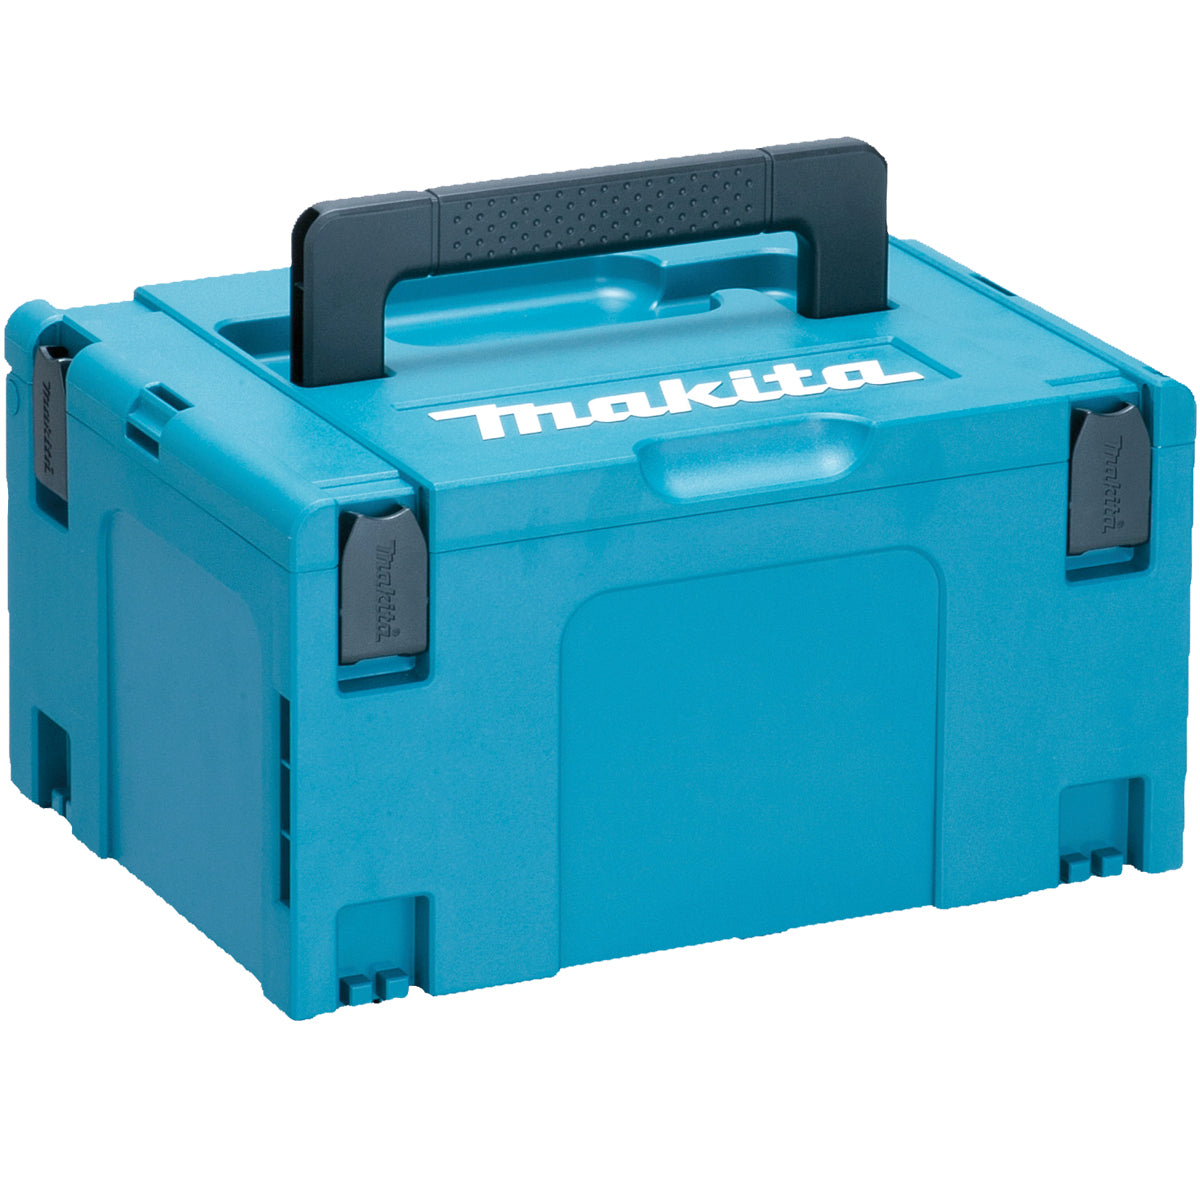 Makita 10 Piece Kit 18V Li-ion With 4 x 5.0Ah Batteries Charger T4TKIT-84